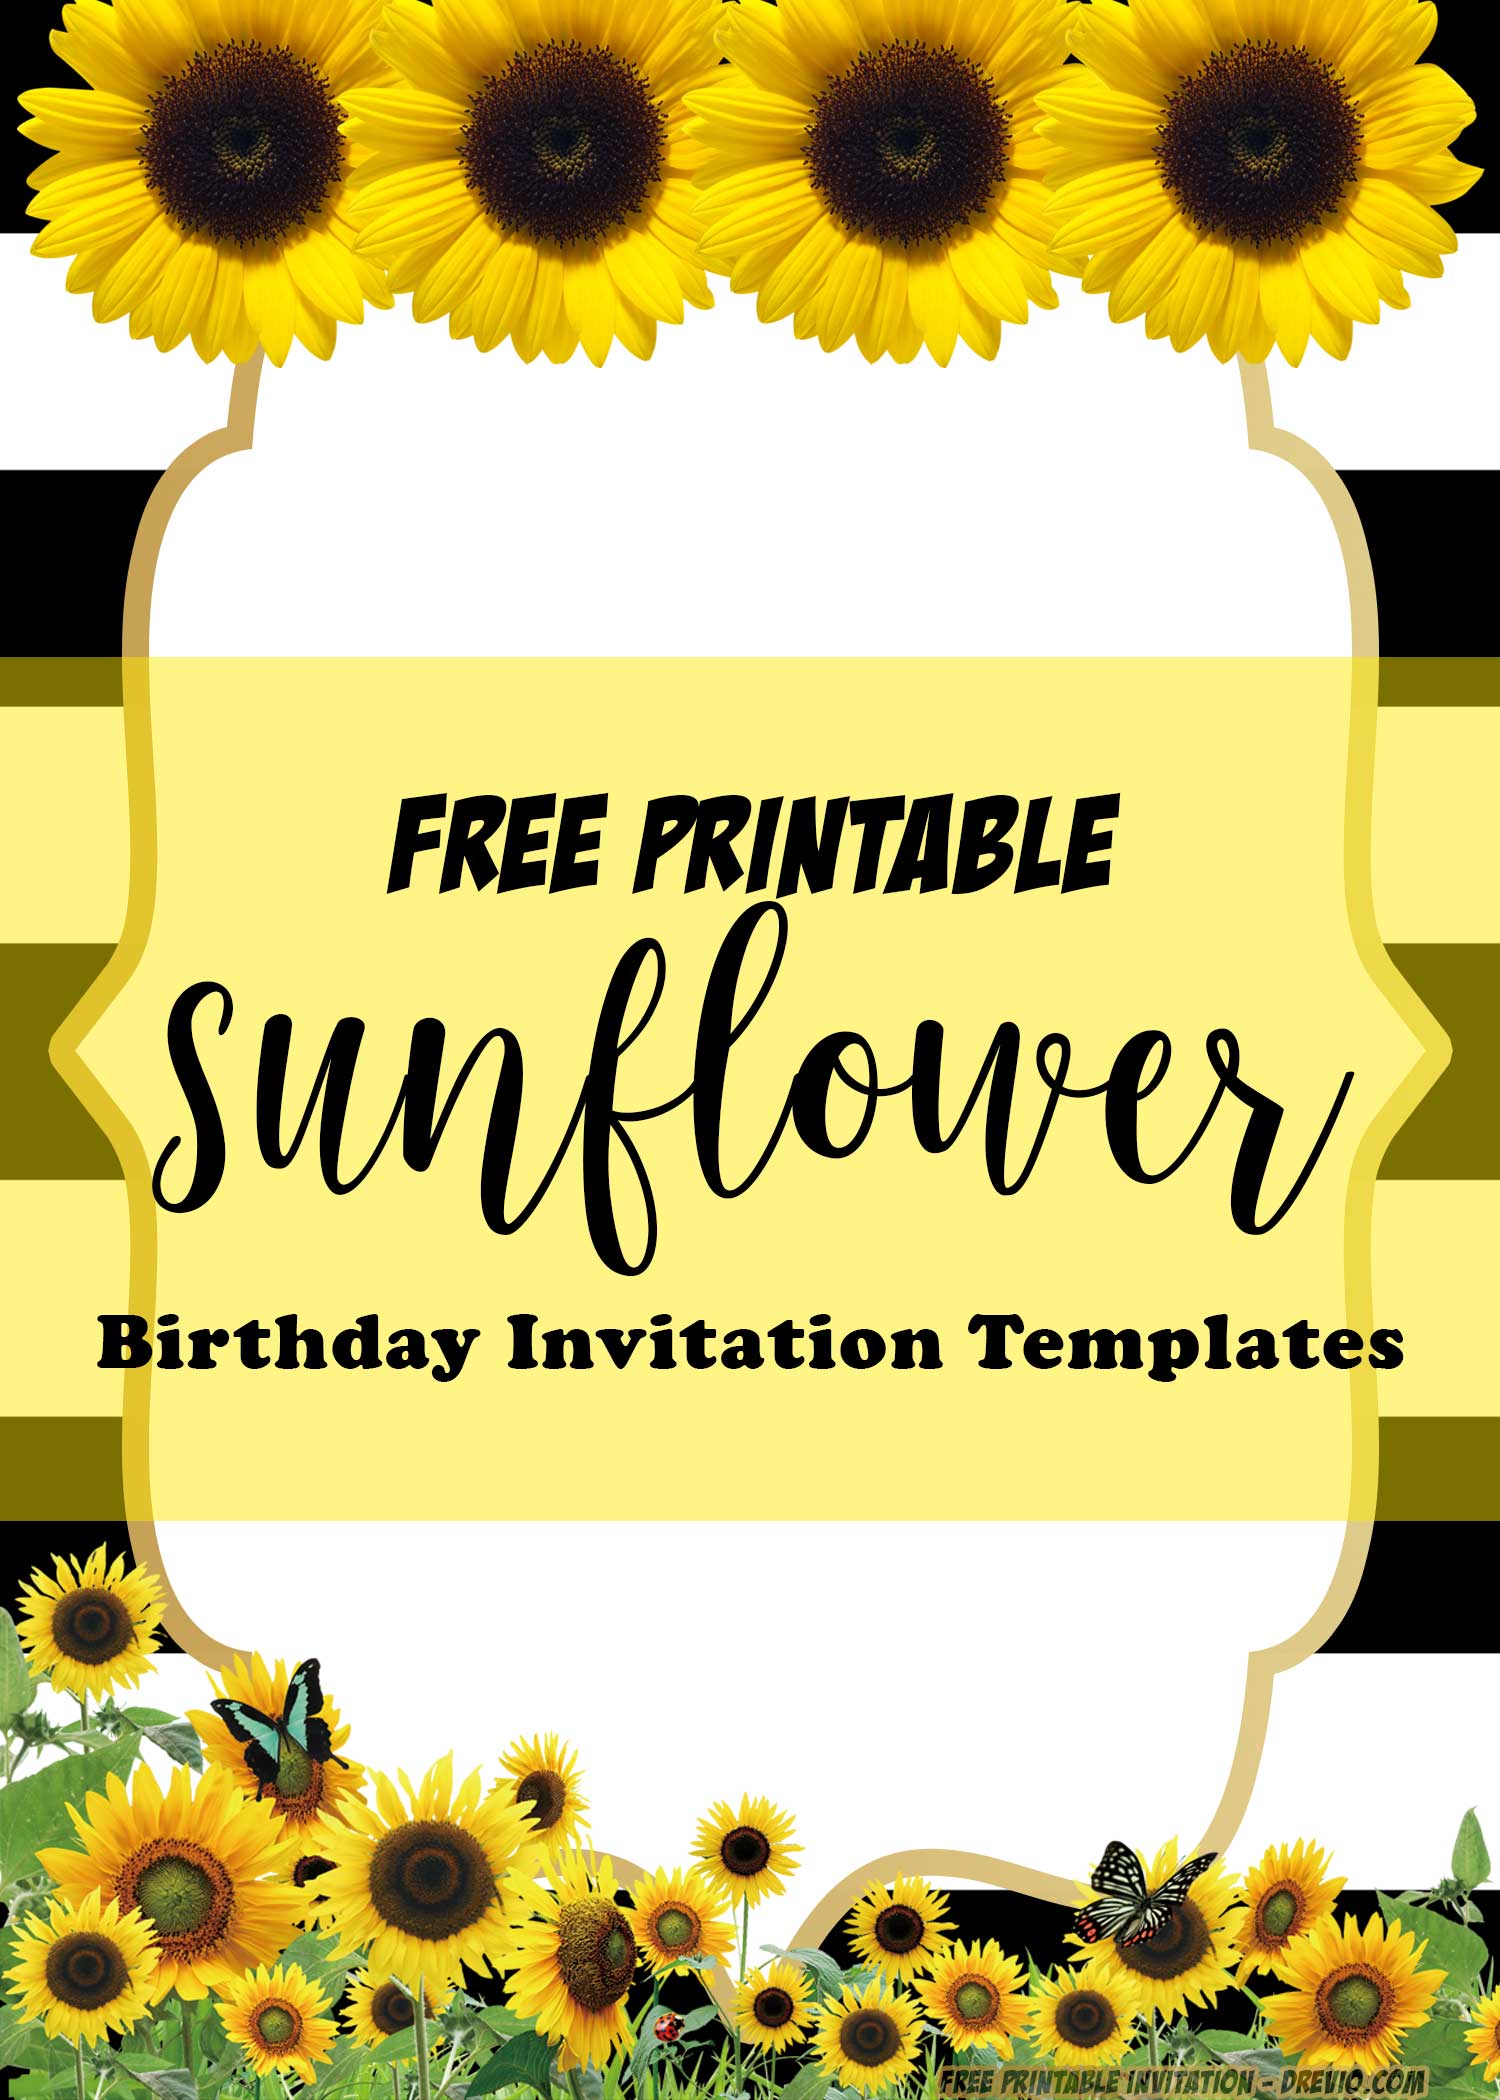 Free Printable Sunflower Birthday Invitation Templates Download Hundreds Free Printable Birthday Invitation Templates